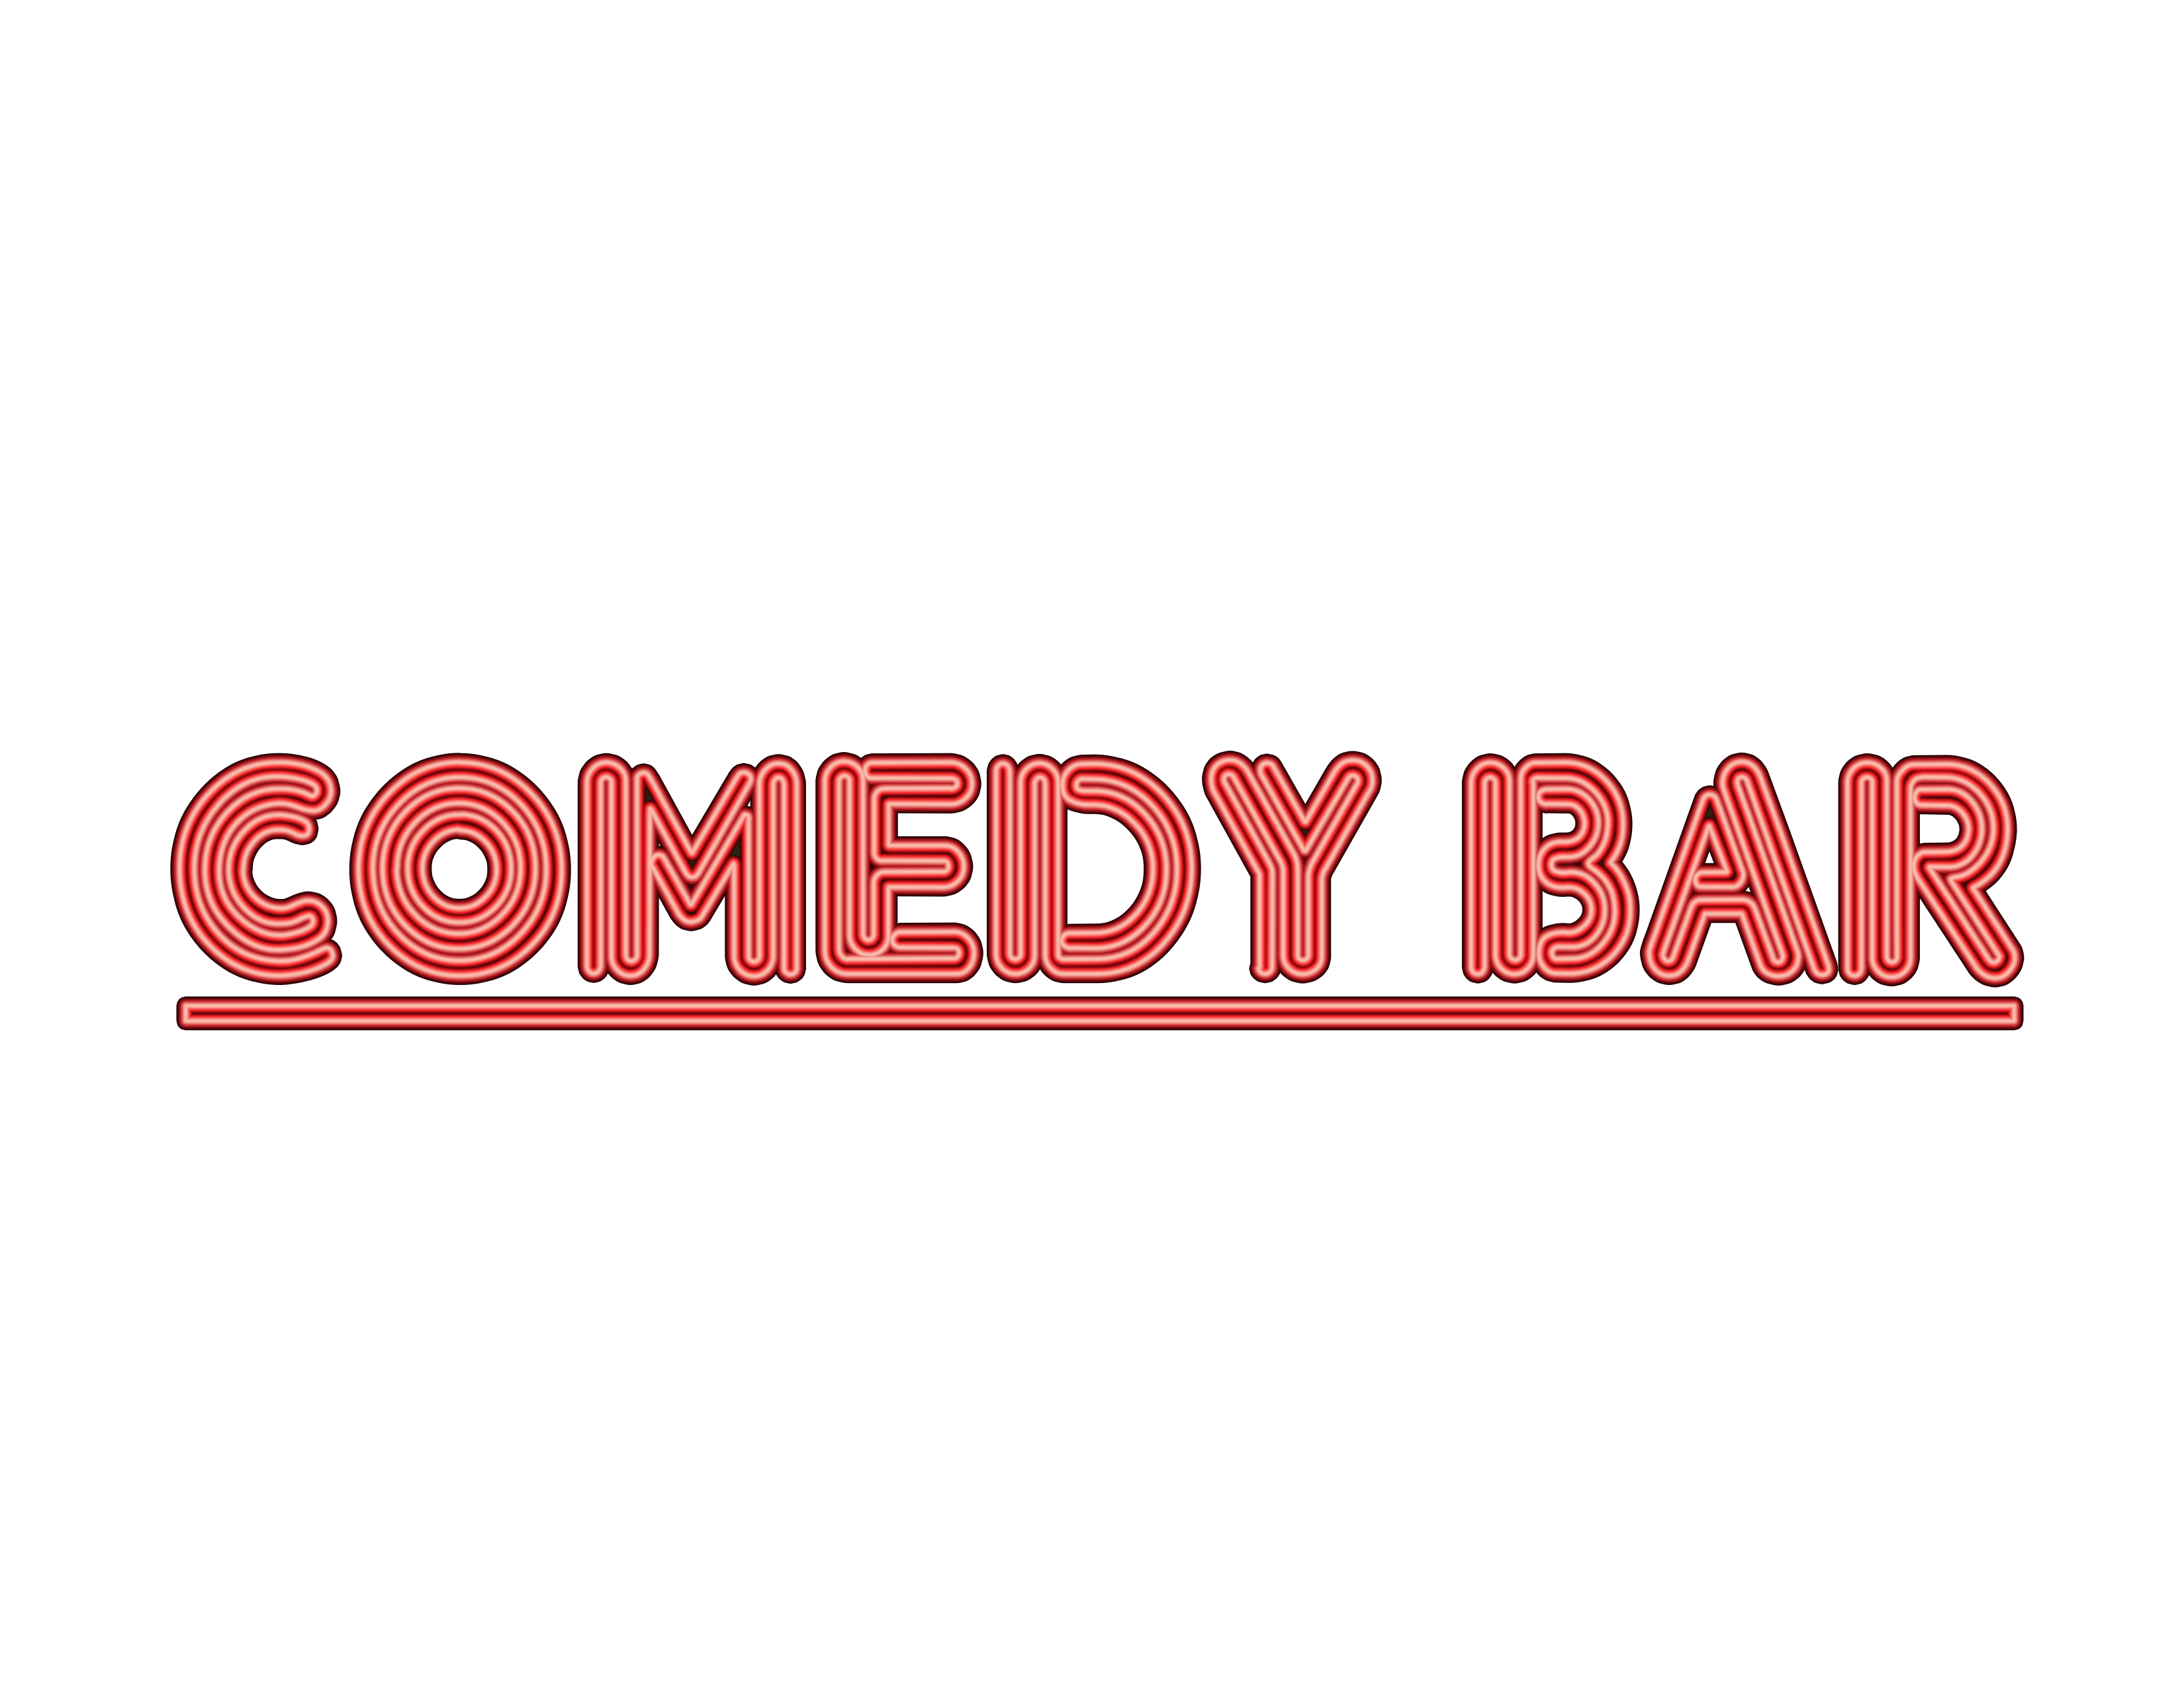 Comedy Bar logo